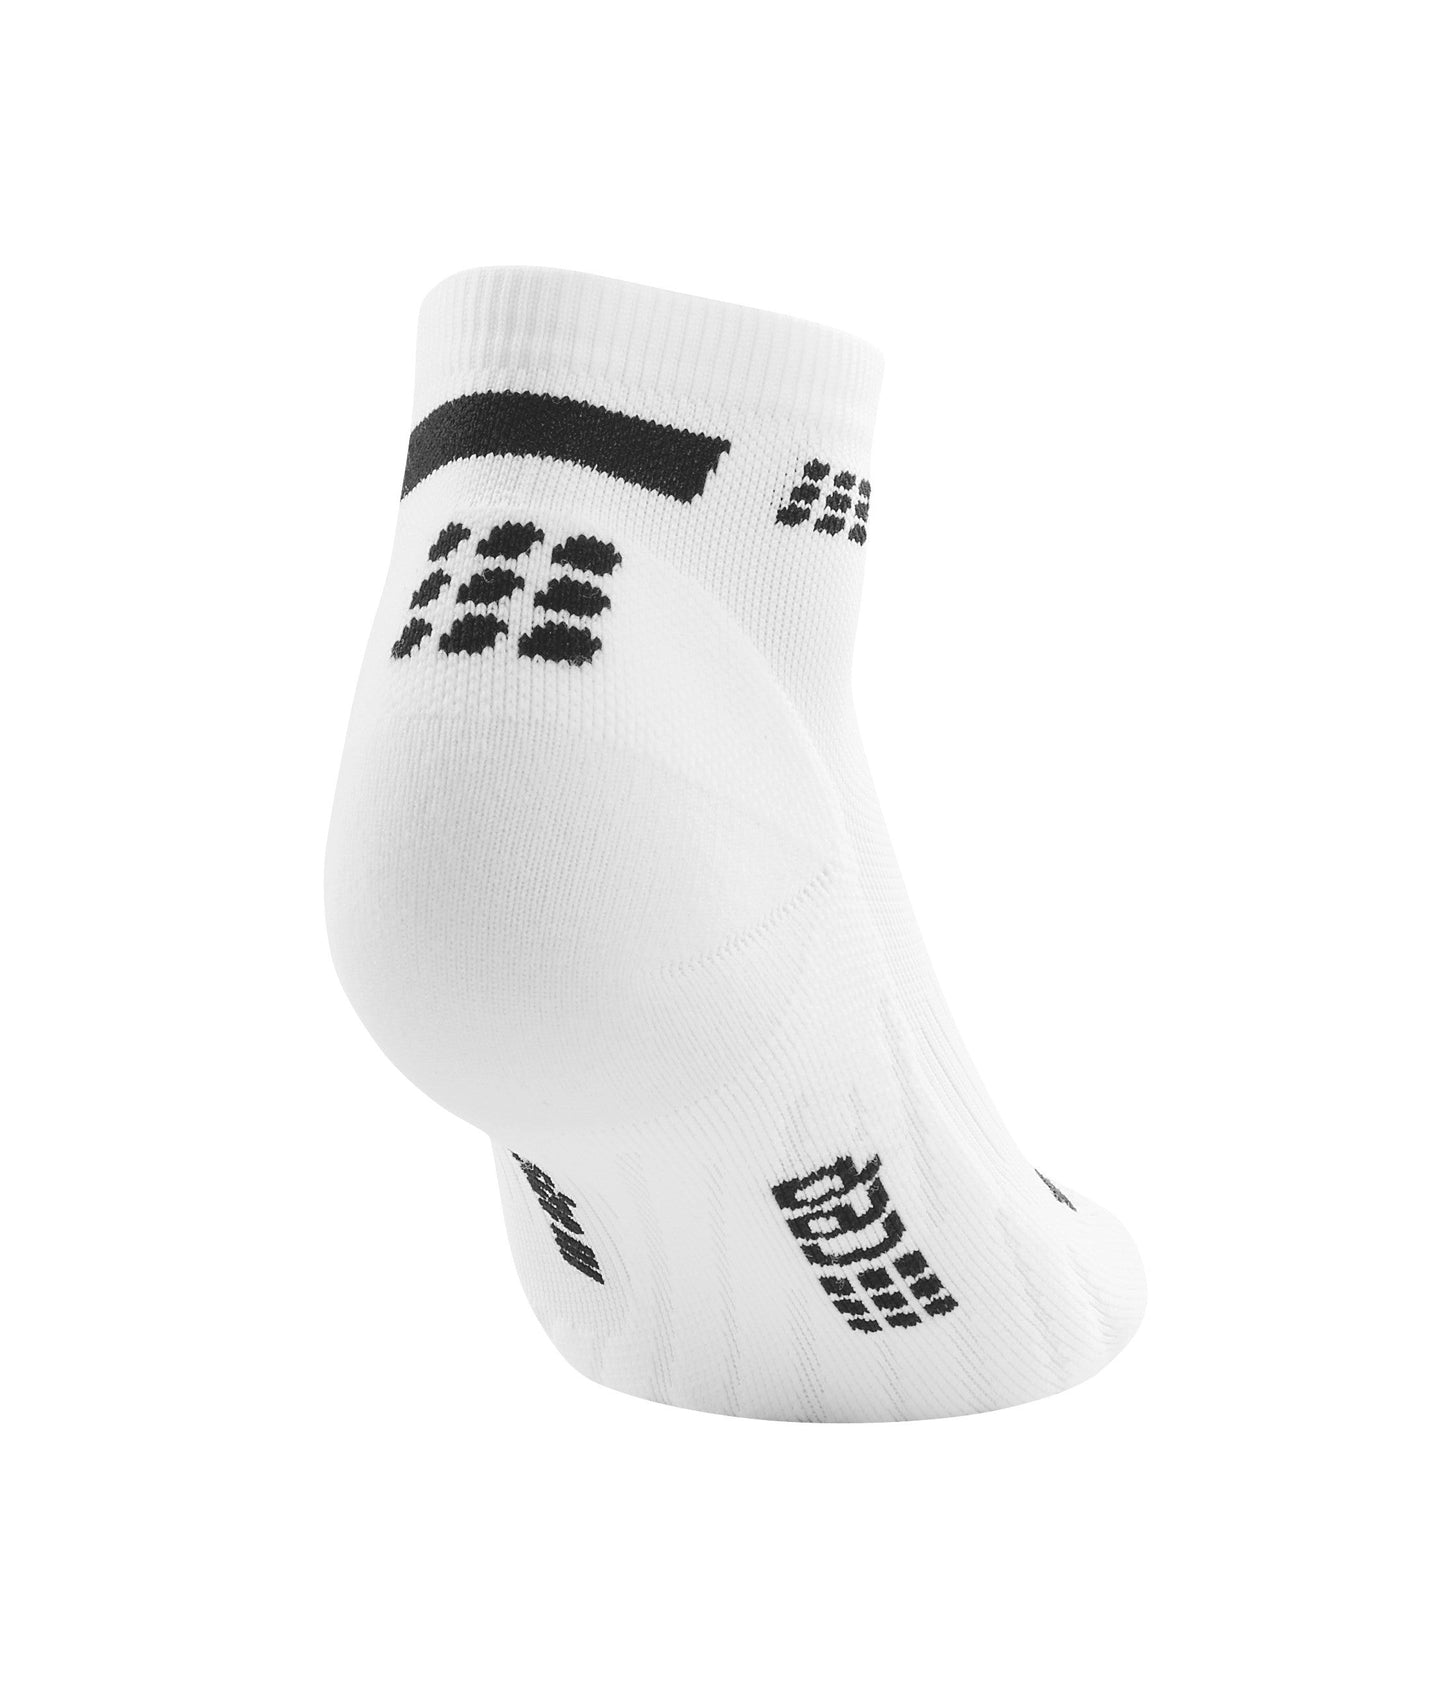 CEP Run Compression Socks Women's Low Cut - White